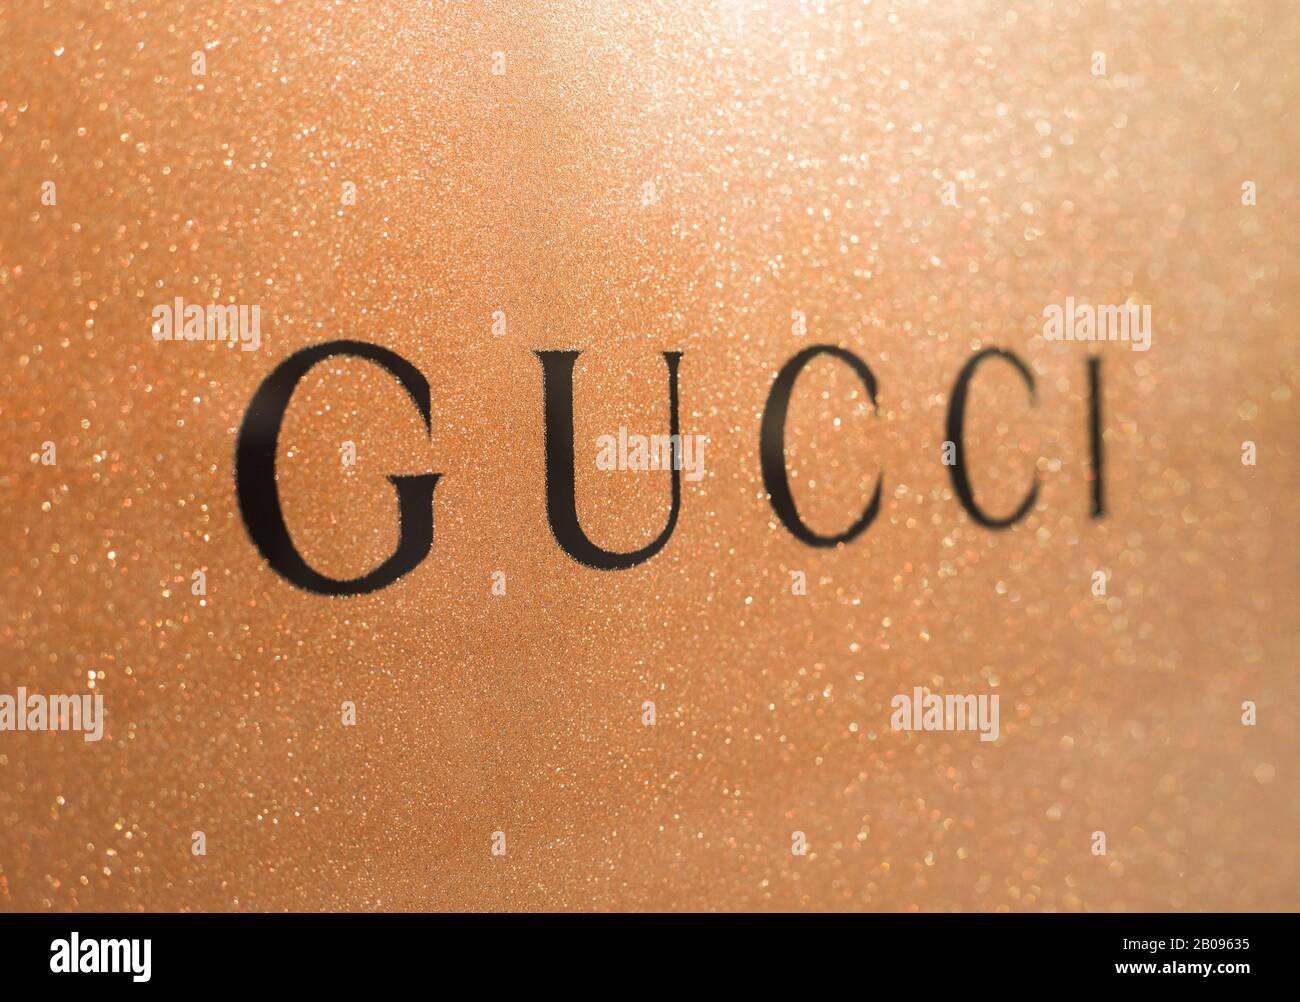 Munich, Germany - Dec 5th, 2019: Gucci clothing brand logo. Stock Photo